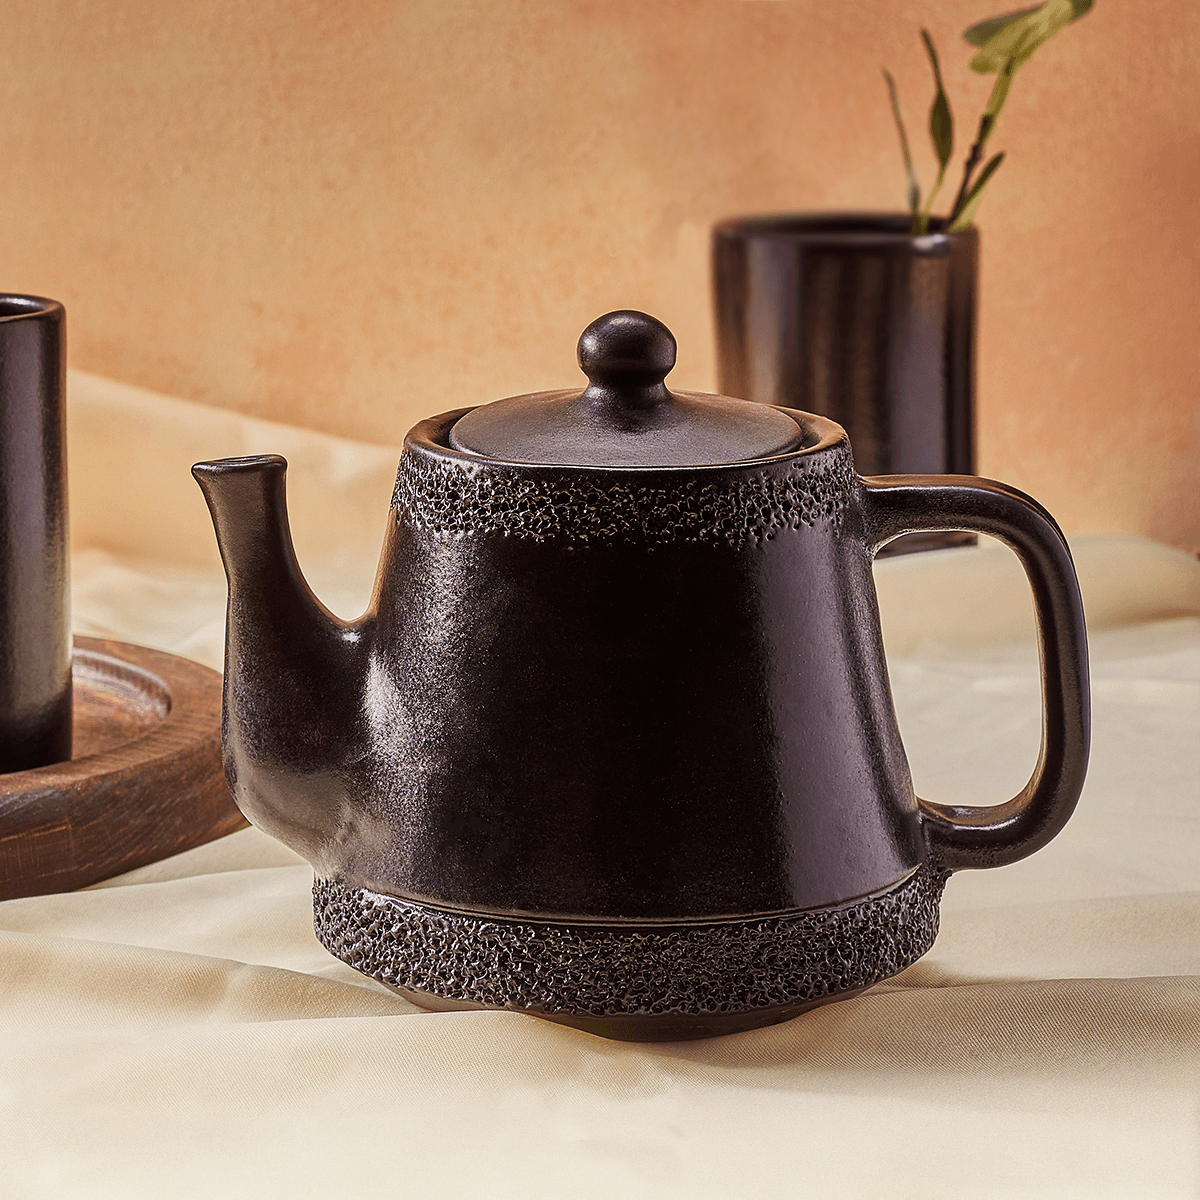 Ashes Teapot - chefmay.com